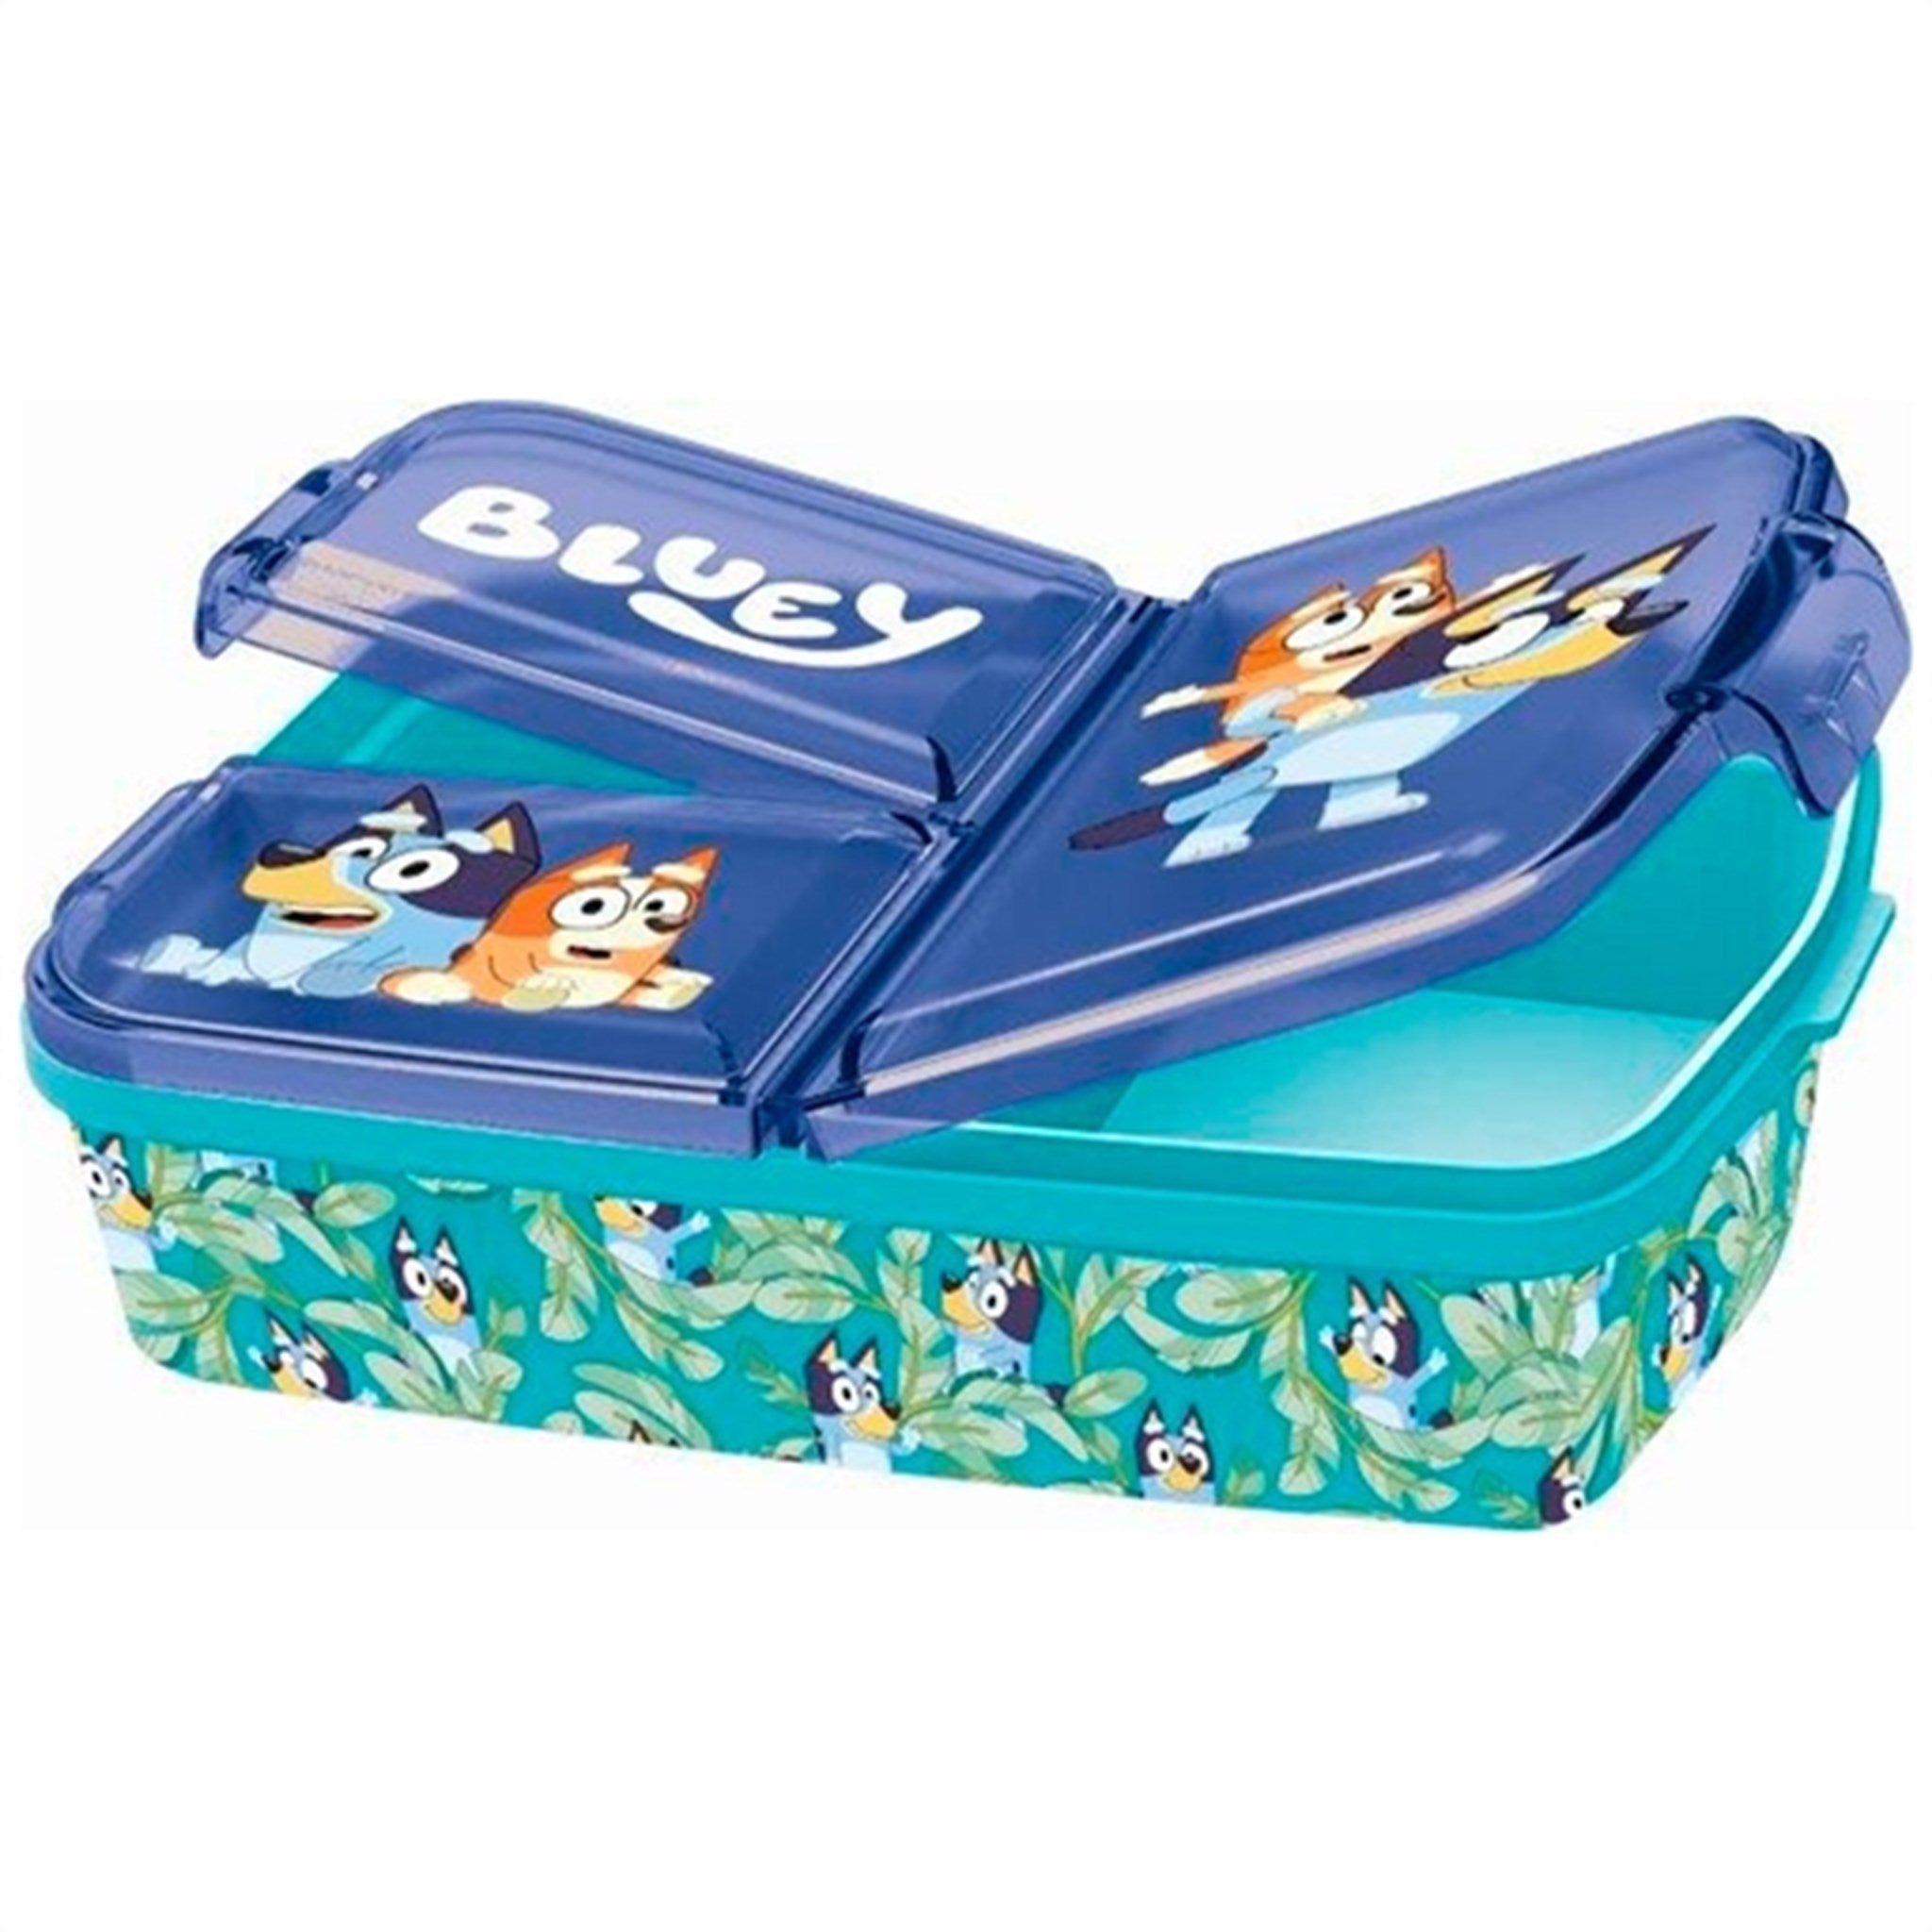 Euromic Bluey Lunch Box